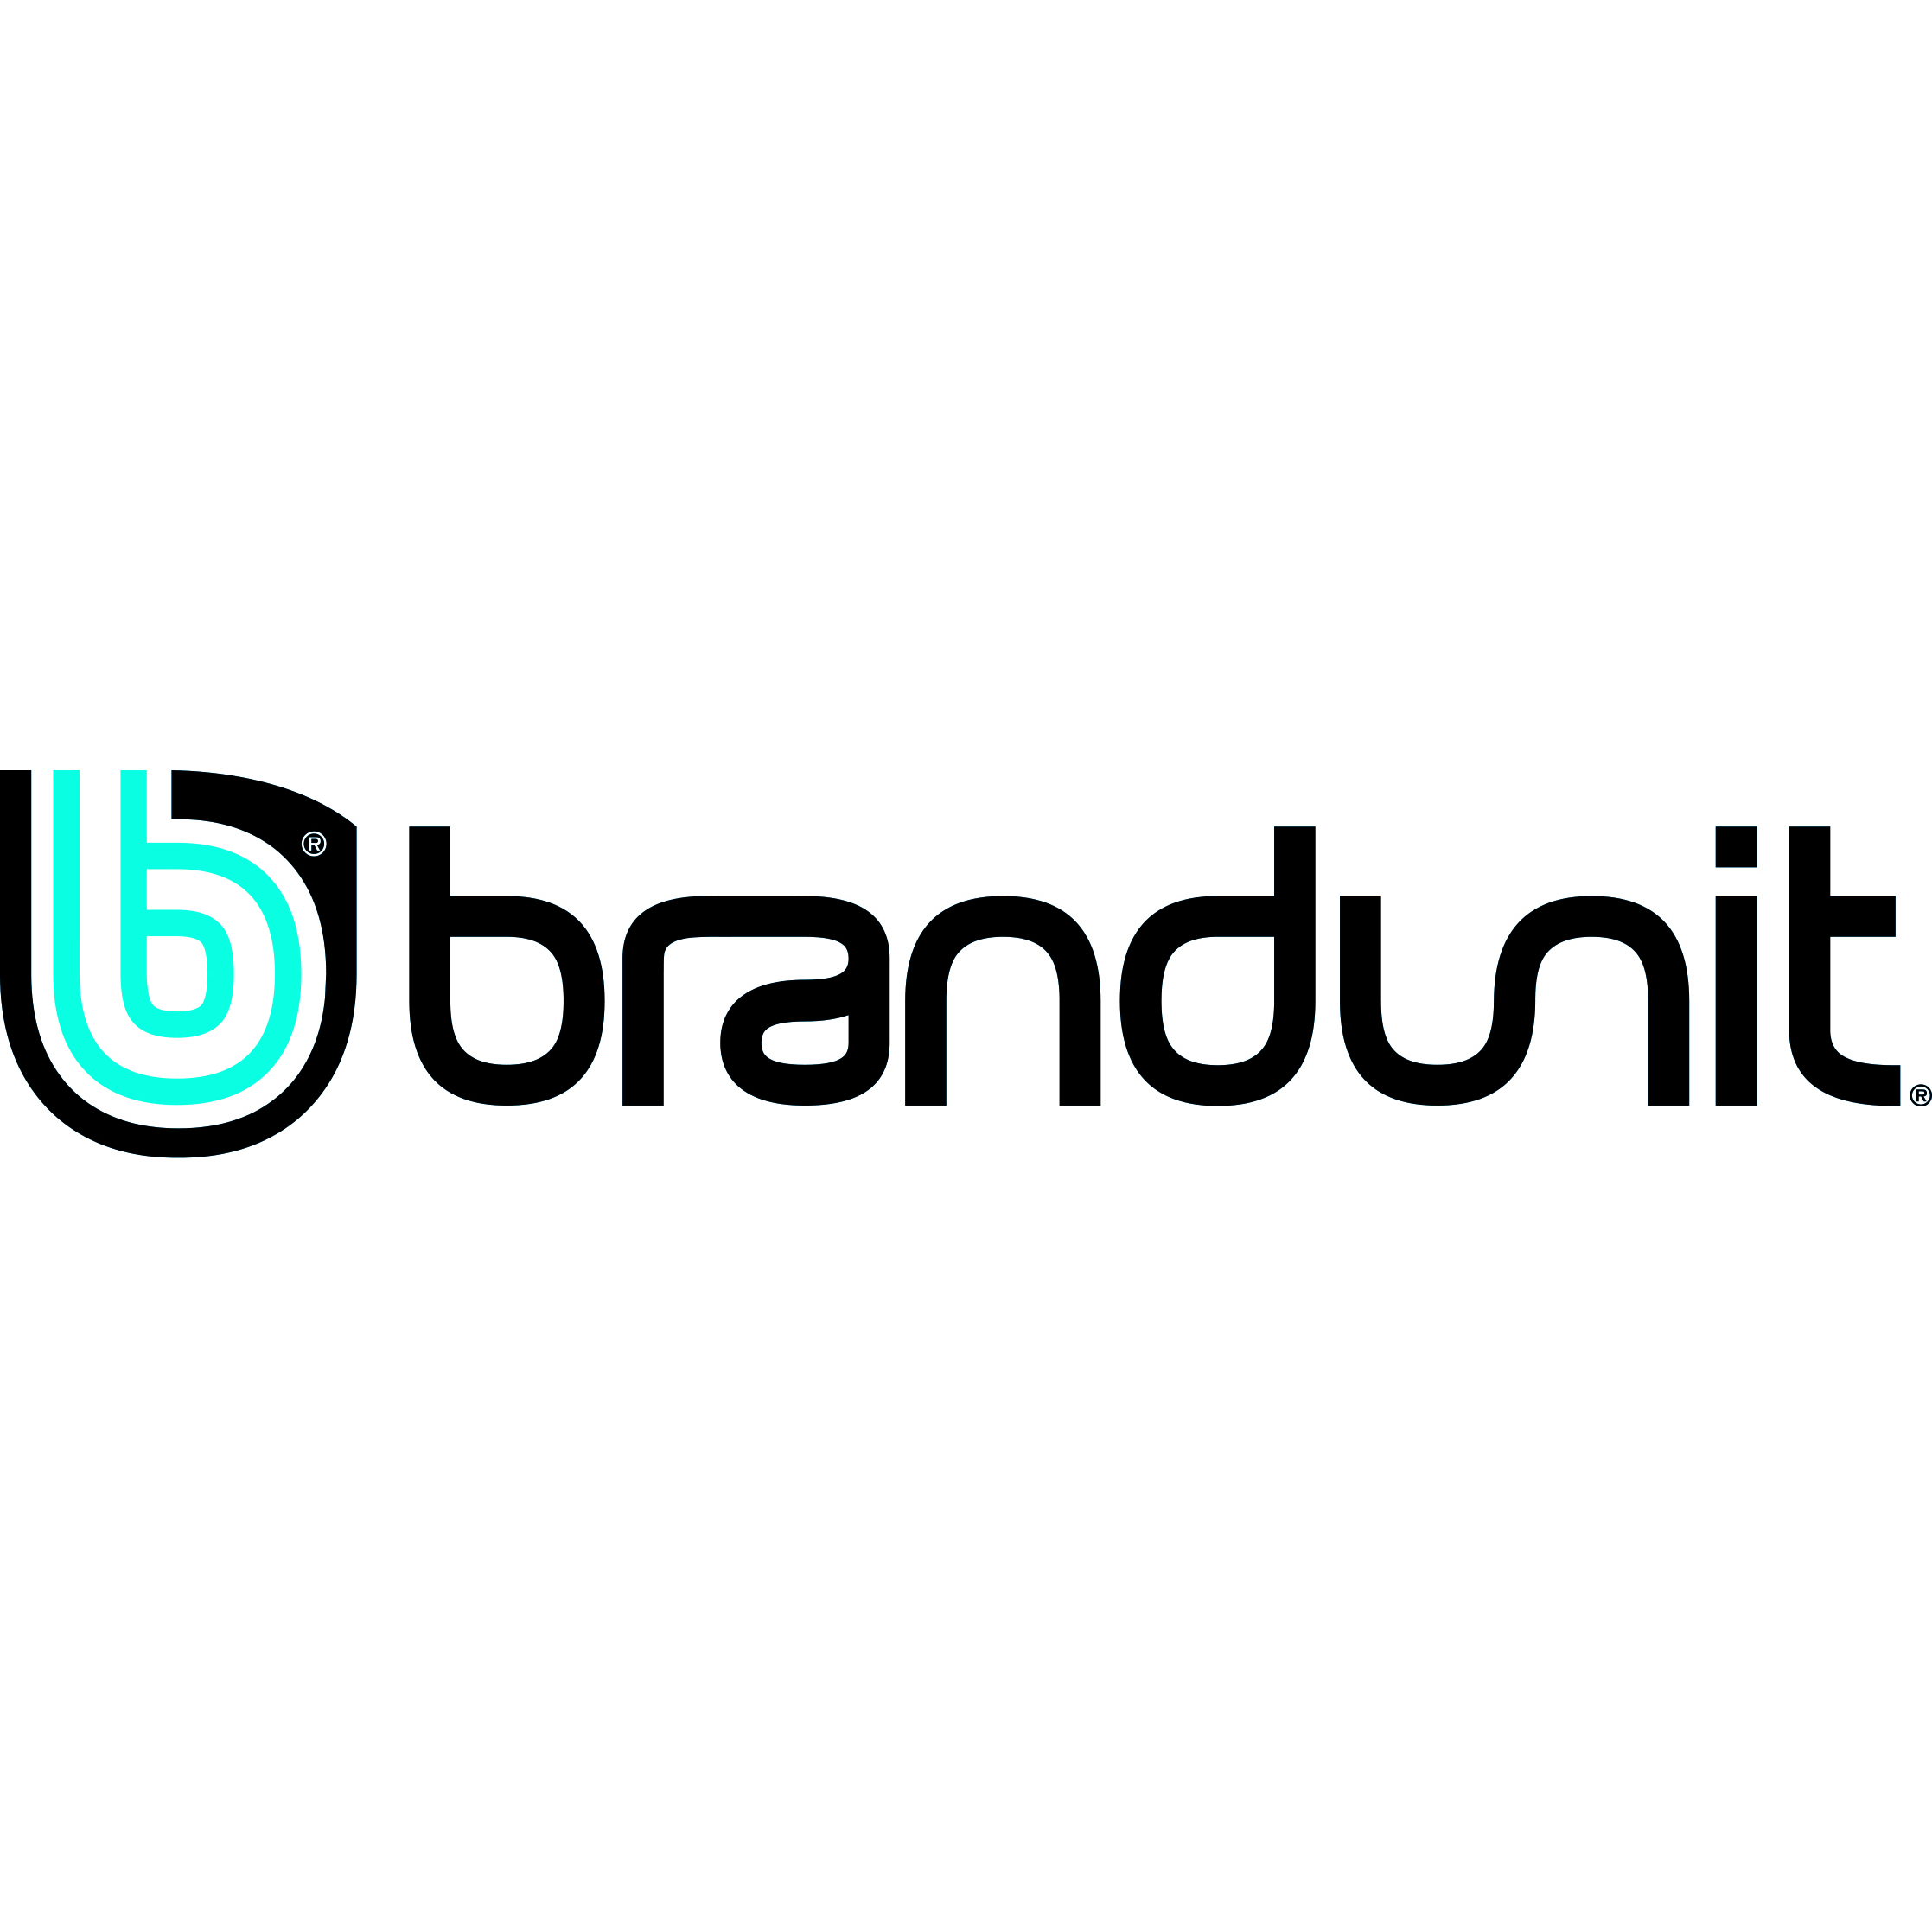 Brandunit GmbH